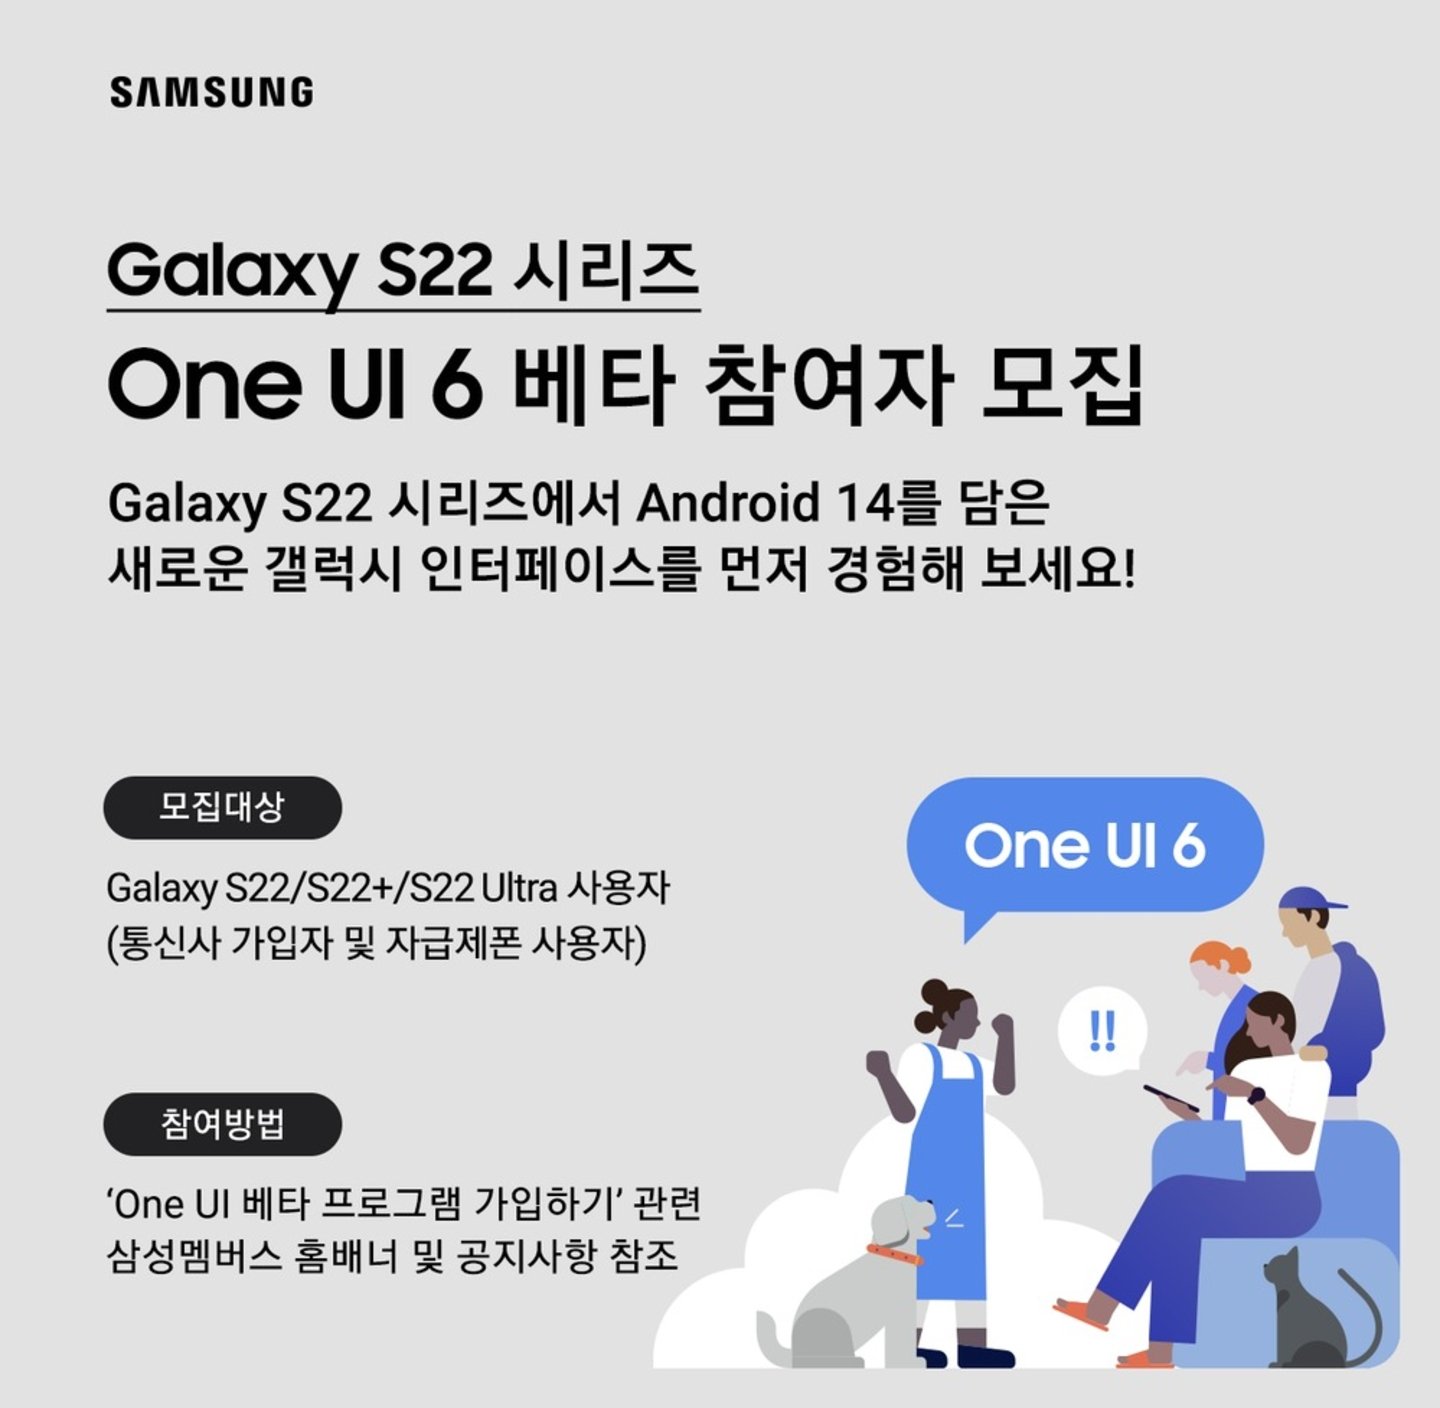 Samsung Galaxy S22 con One UI 6